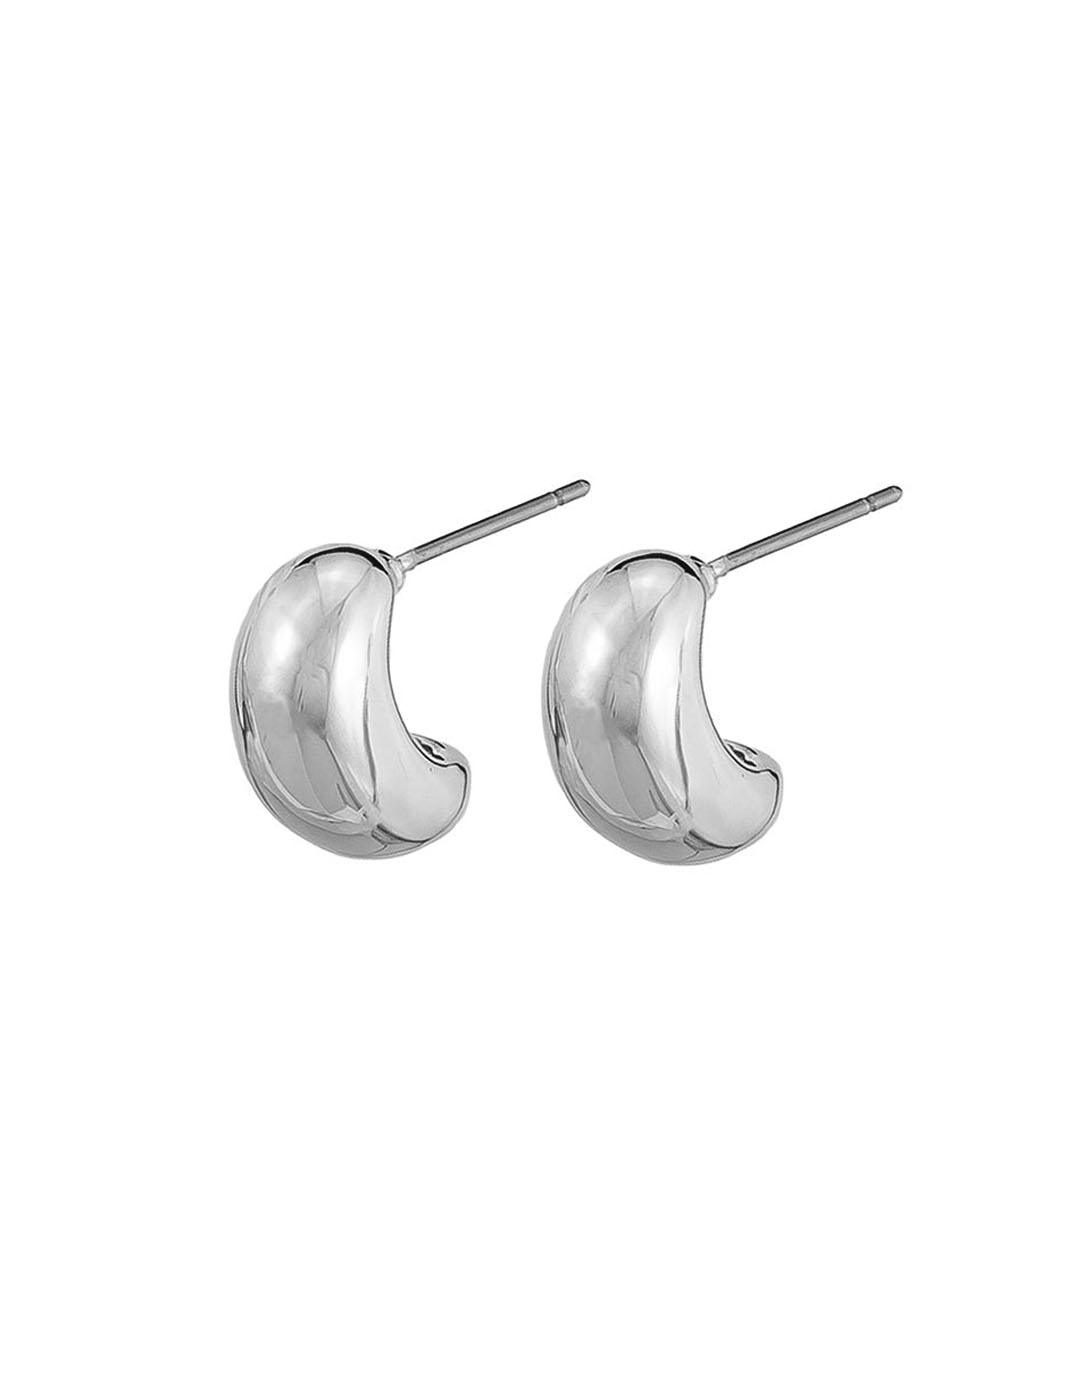 Jolie & Deen - Rumi Earrings - Silver - paulaglazebrook Accessories